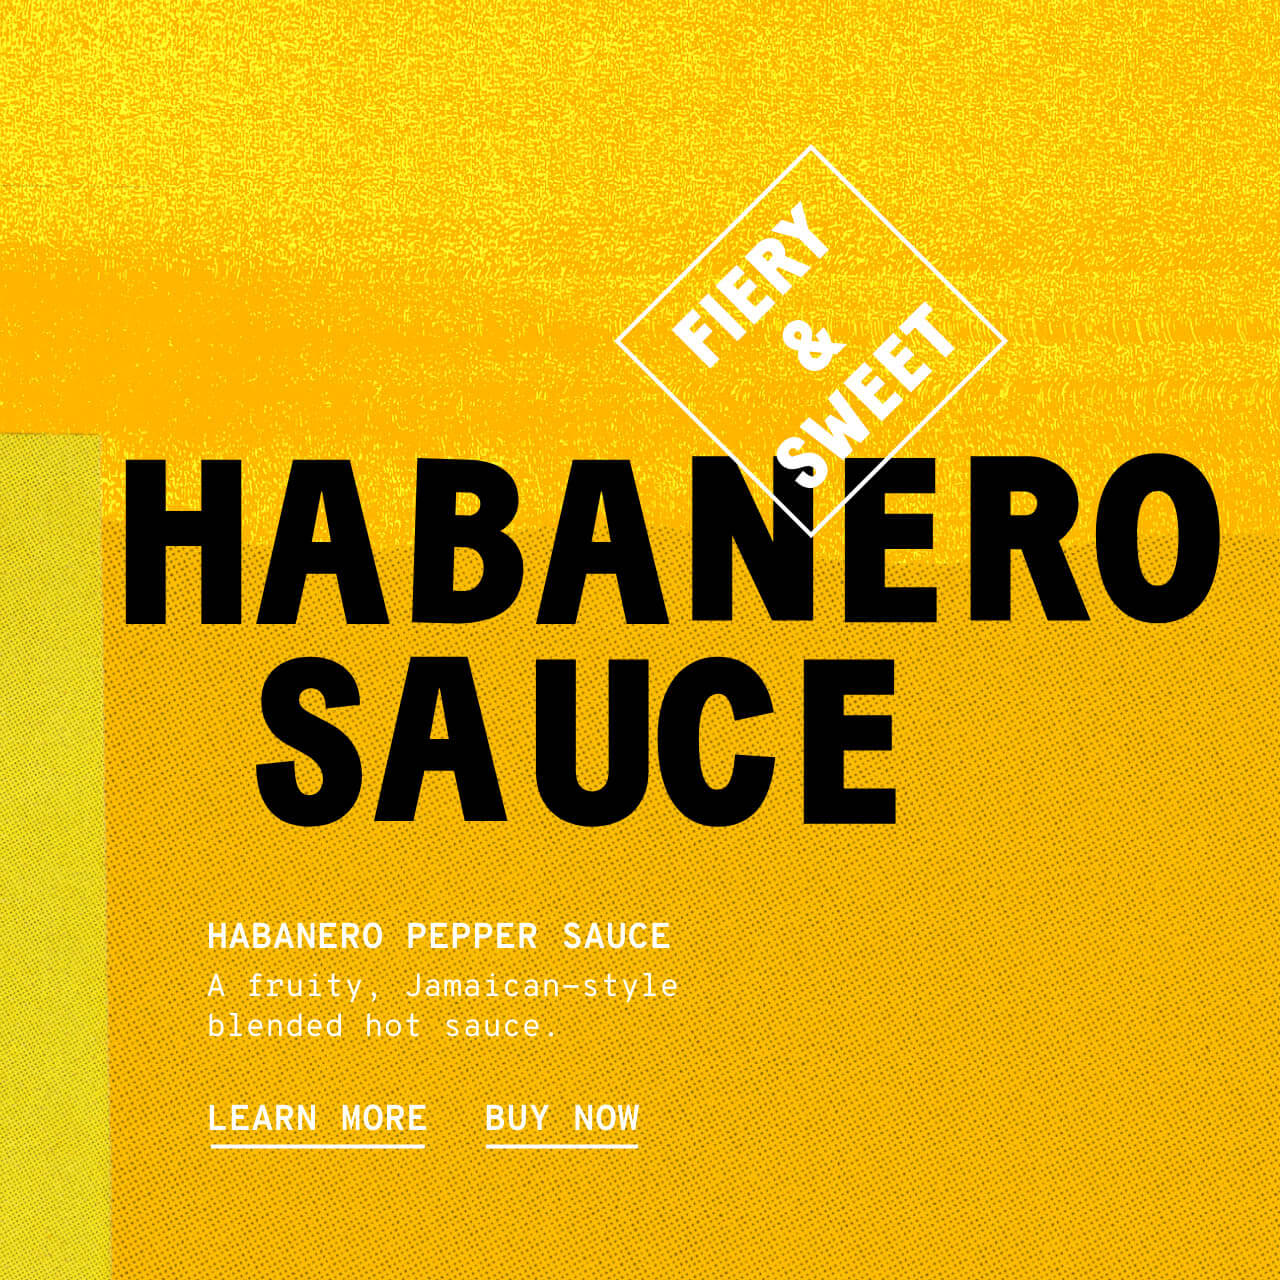 Habanero Pepper Sauce - Description